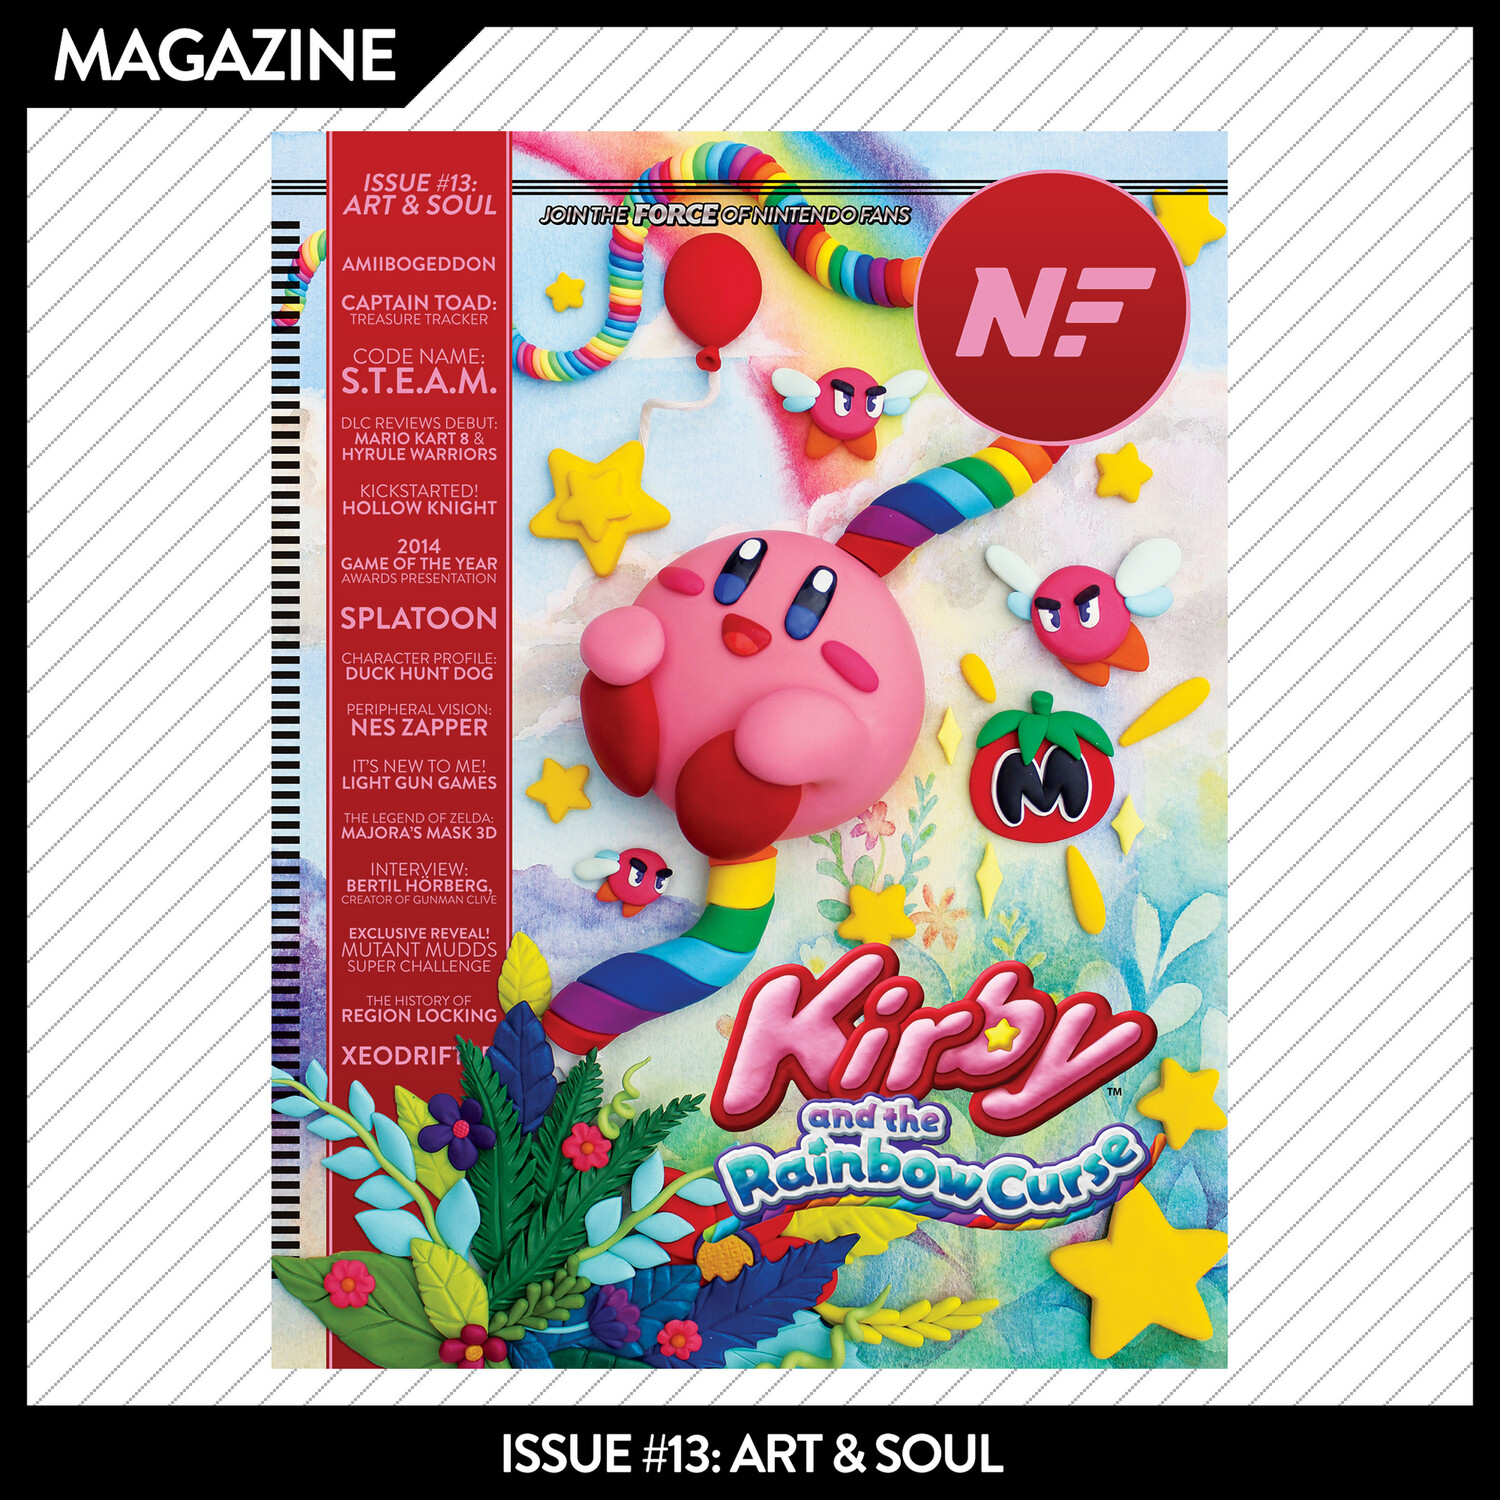 Issue #13: Art & Soul – January/February 2015